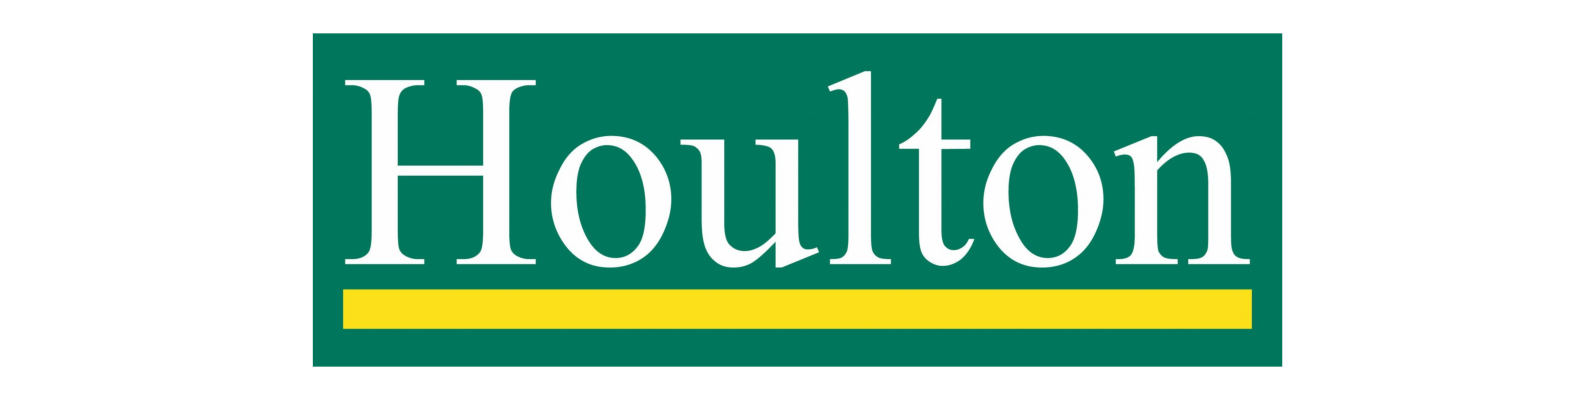 Houlton logo